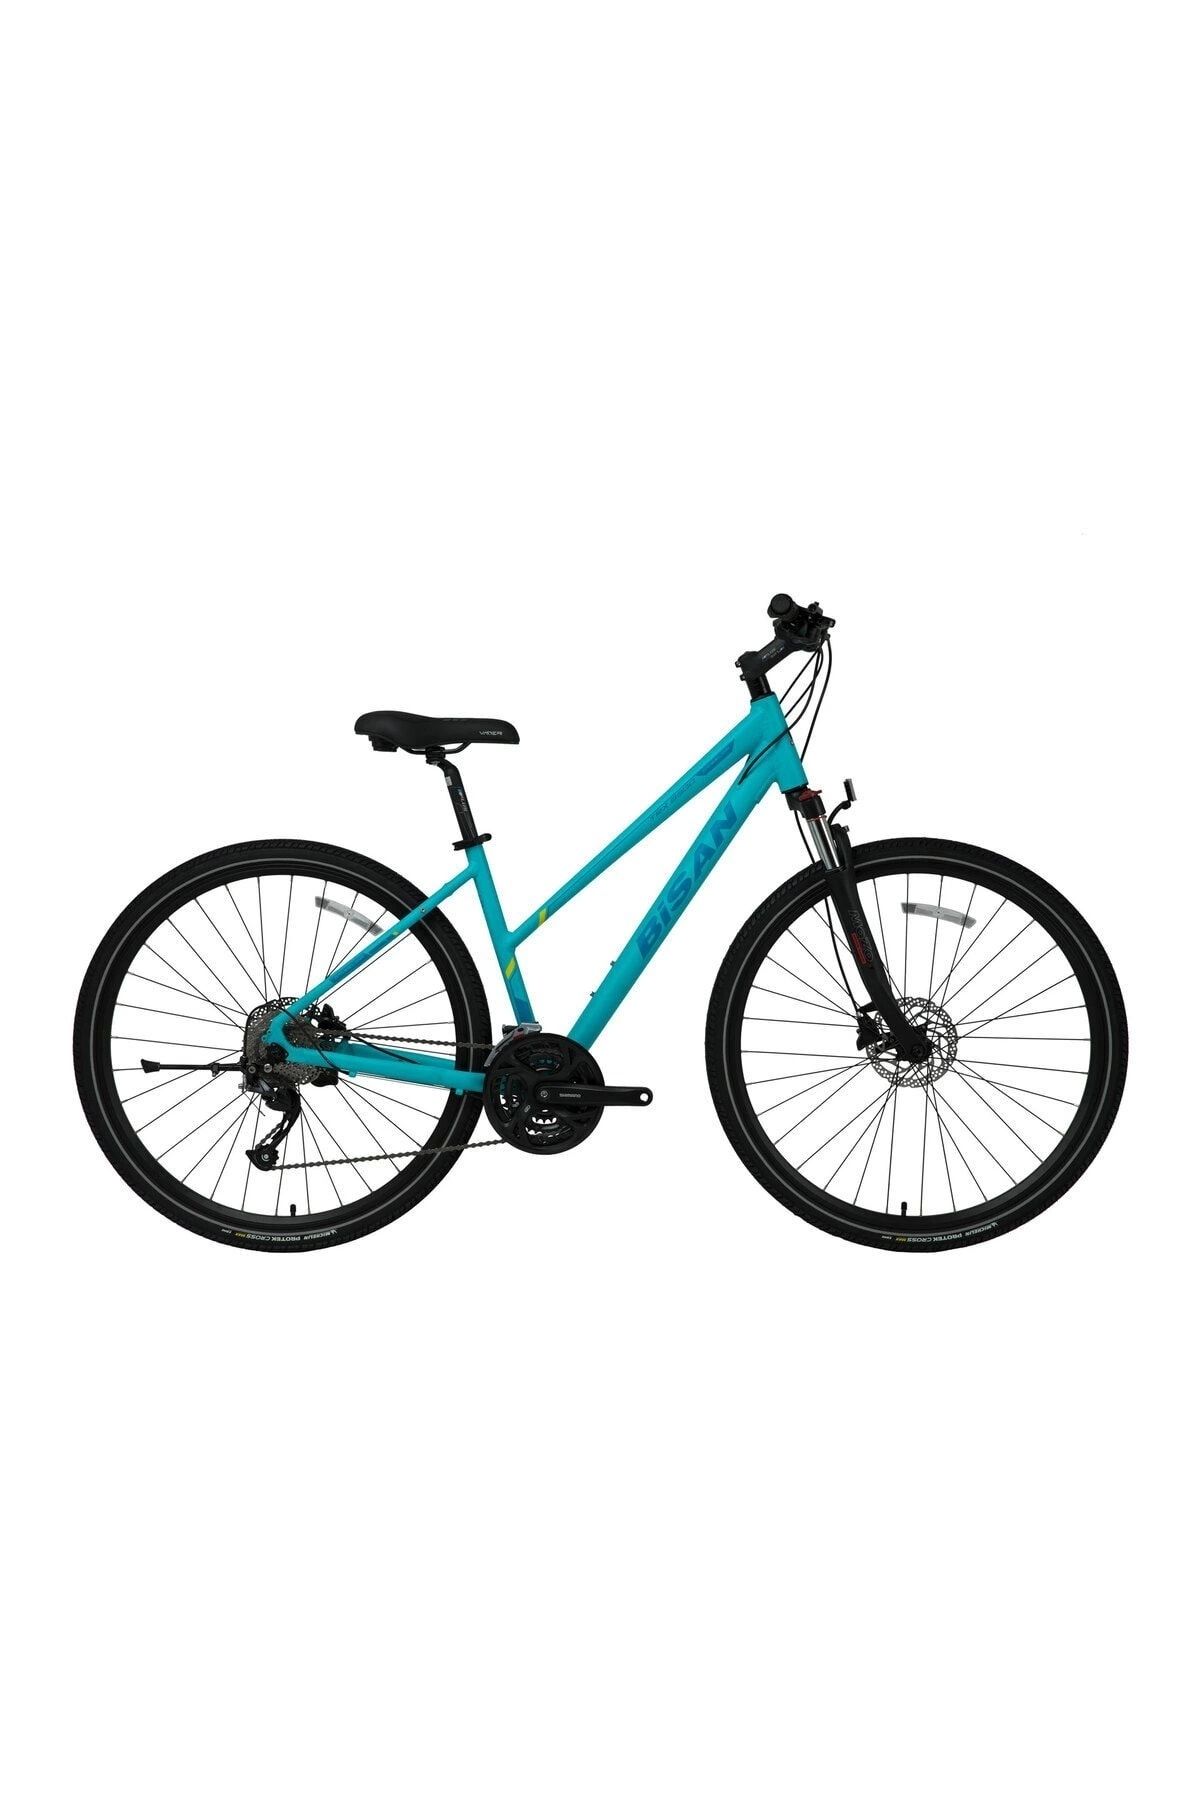 Bisan TRX 8300 Griselda Altus 28 Jant 45 cm 27 Vites HD Kadın Trekking Şehir Bisikleti - Turkuaz-Mavi